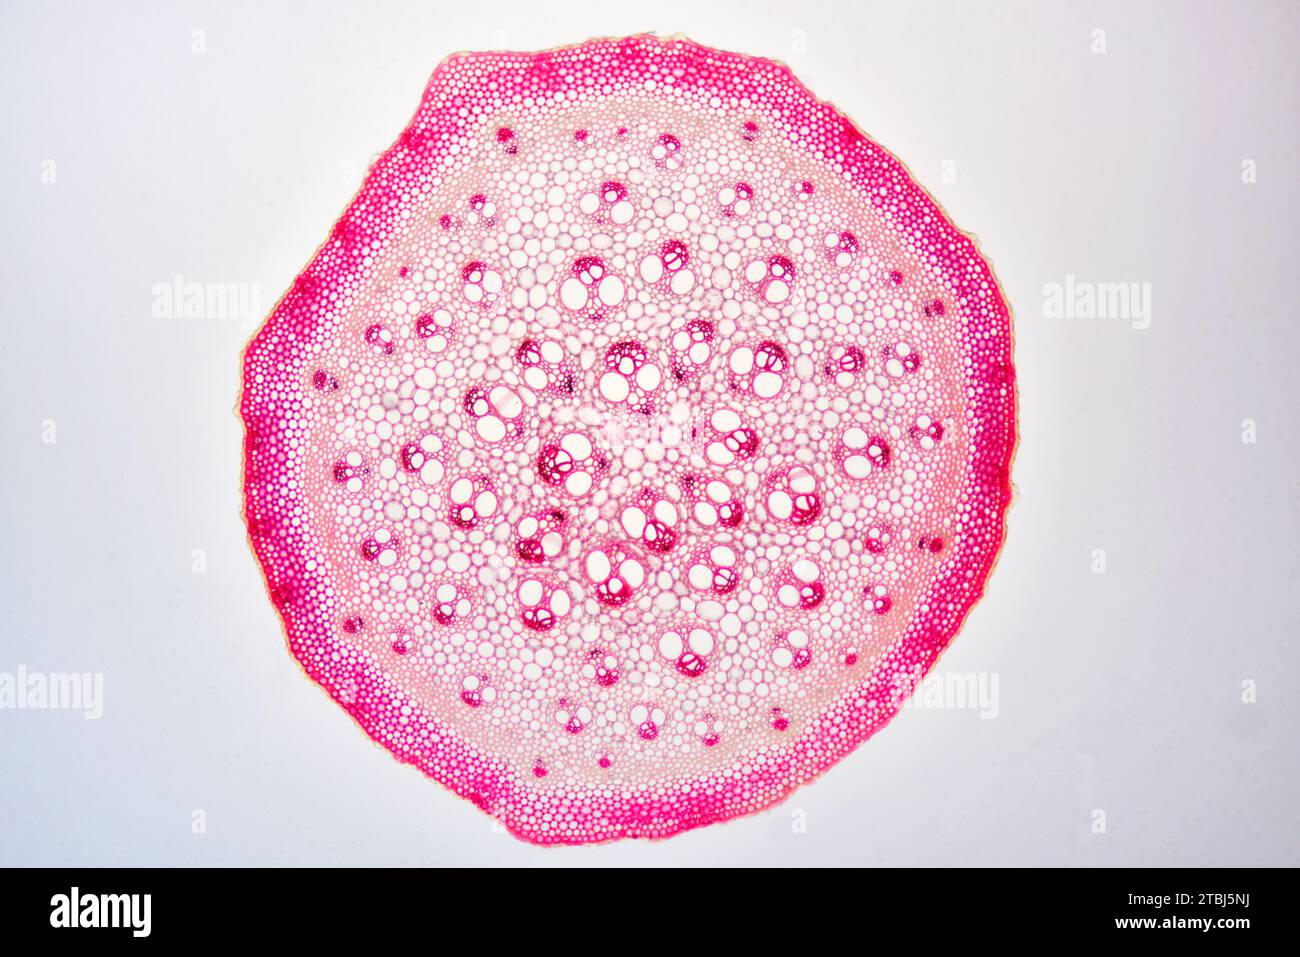 Monocot stem (Smilax aspera) showing epidermis, collenchyma, cortex, parenchyma, vascular bundles, phloem and xylem. Optical microscope X40. Stock Photo